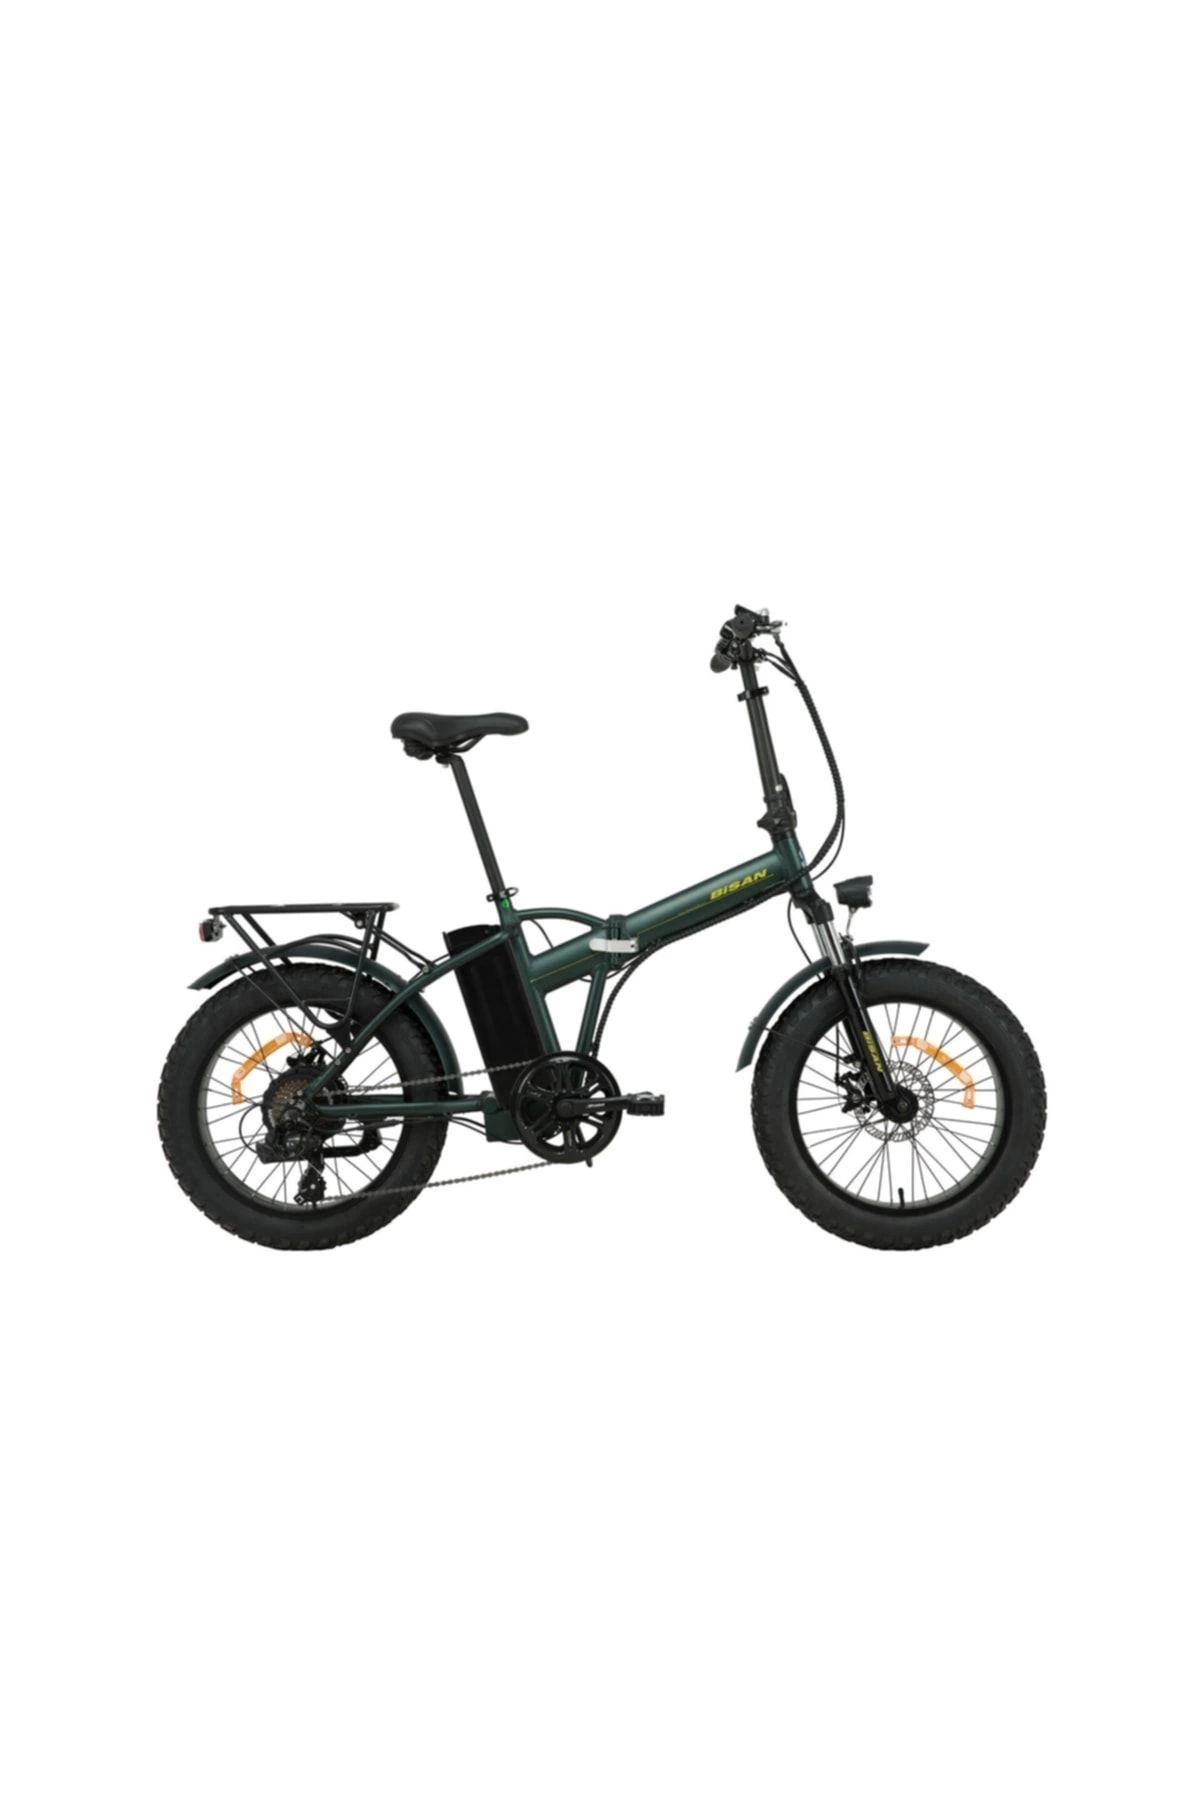 Bisan E-foldıng F2 20 Jant Elektrikli Katlanır Bisiklet Kadro: 17 - 43 Cm 7vites Yeşil Sarı